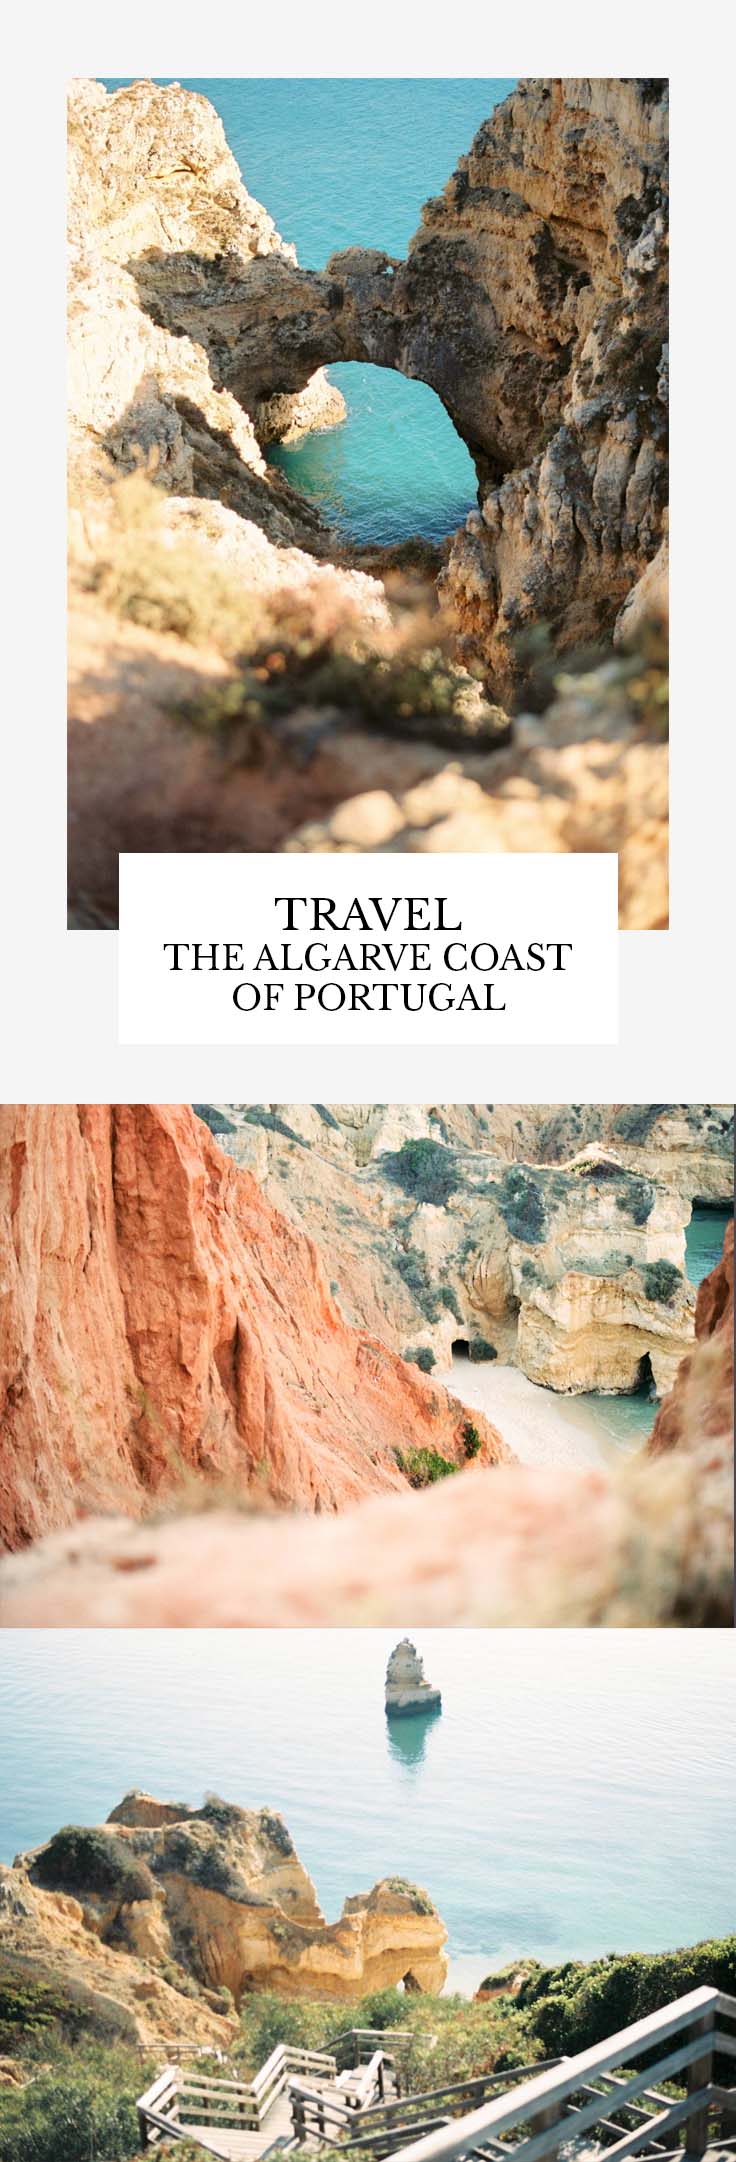 Lagos - The stunning Algarve Coast in Portugal